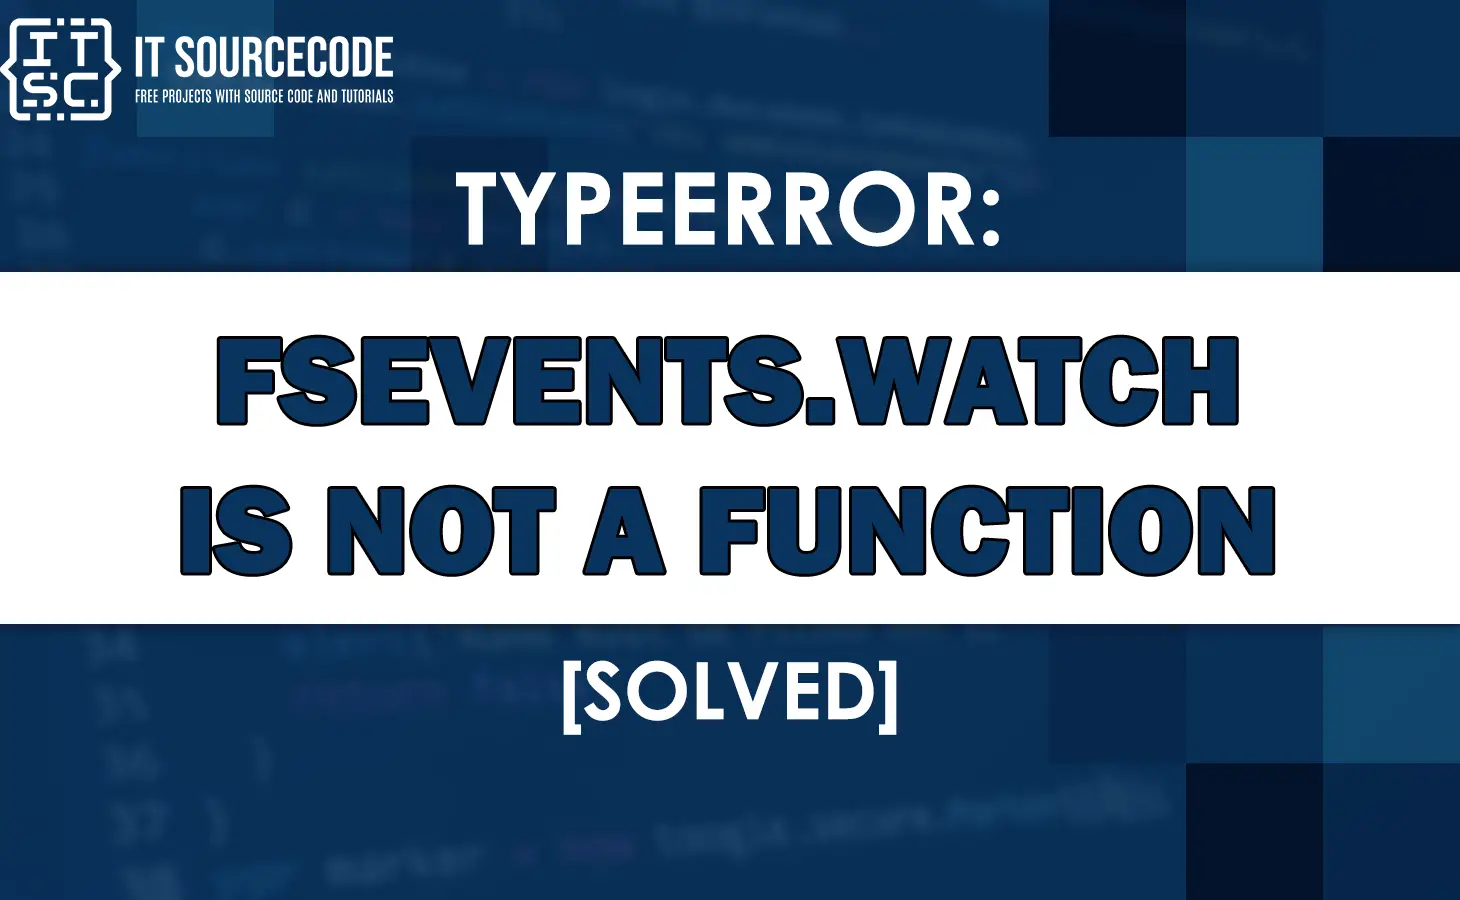 Typeerror: fsevents.watch is not a function